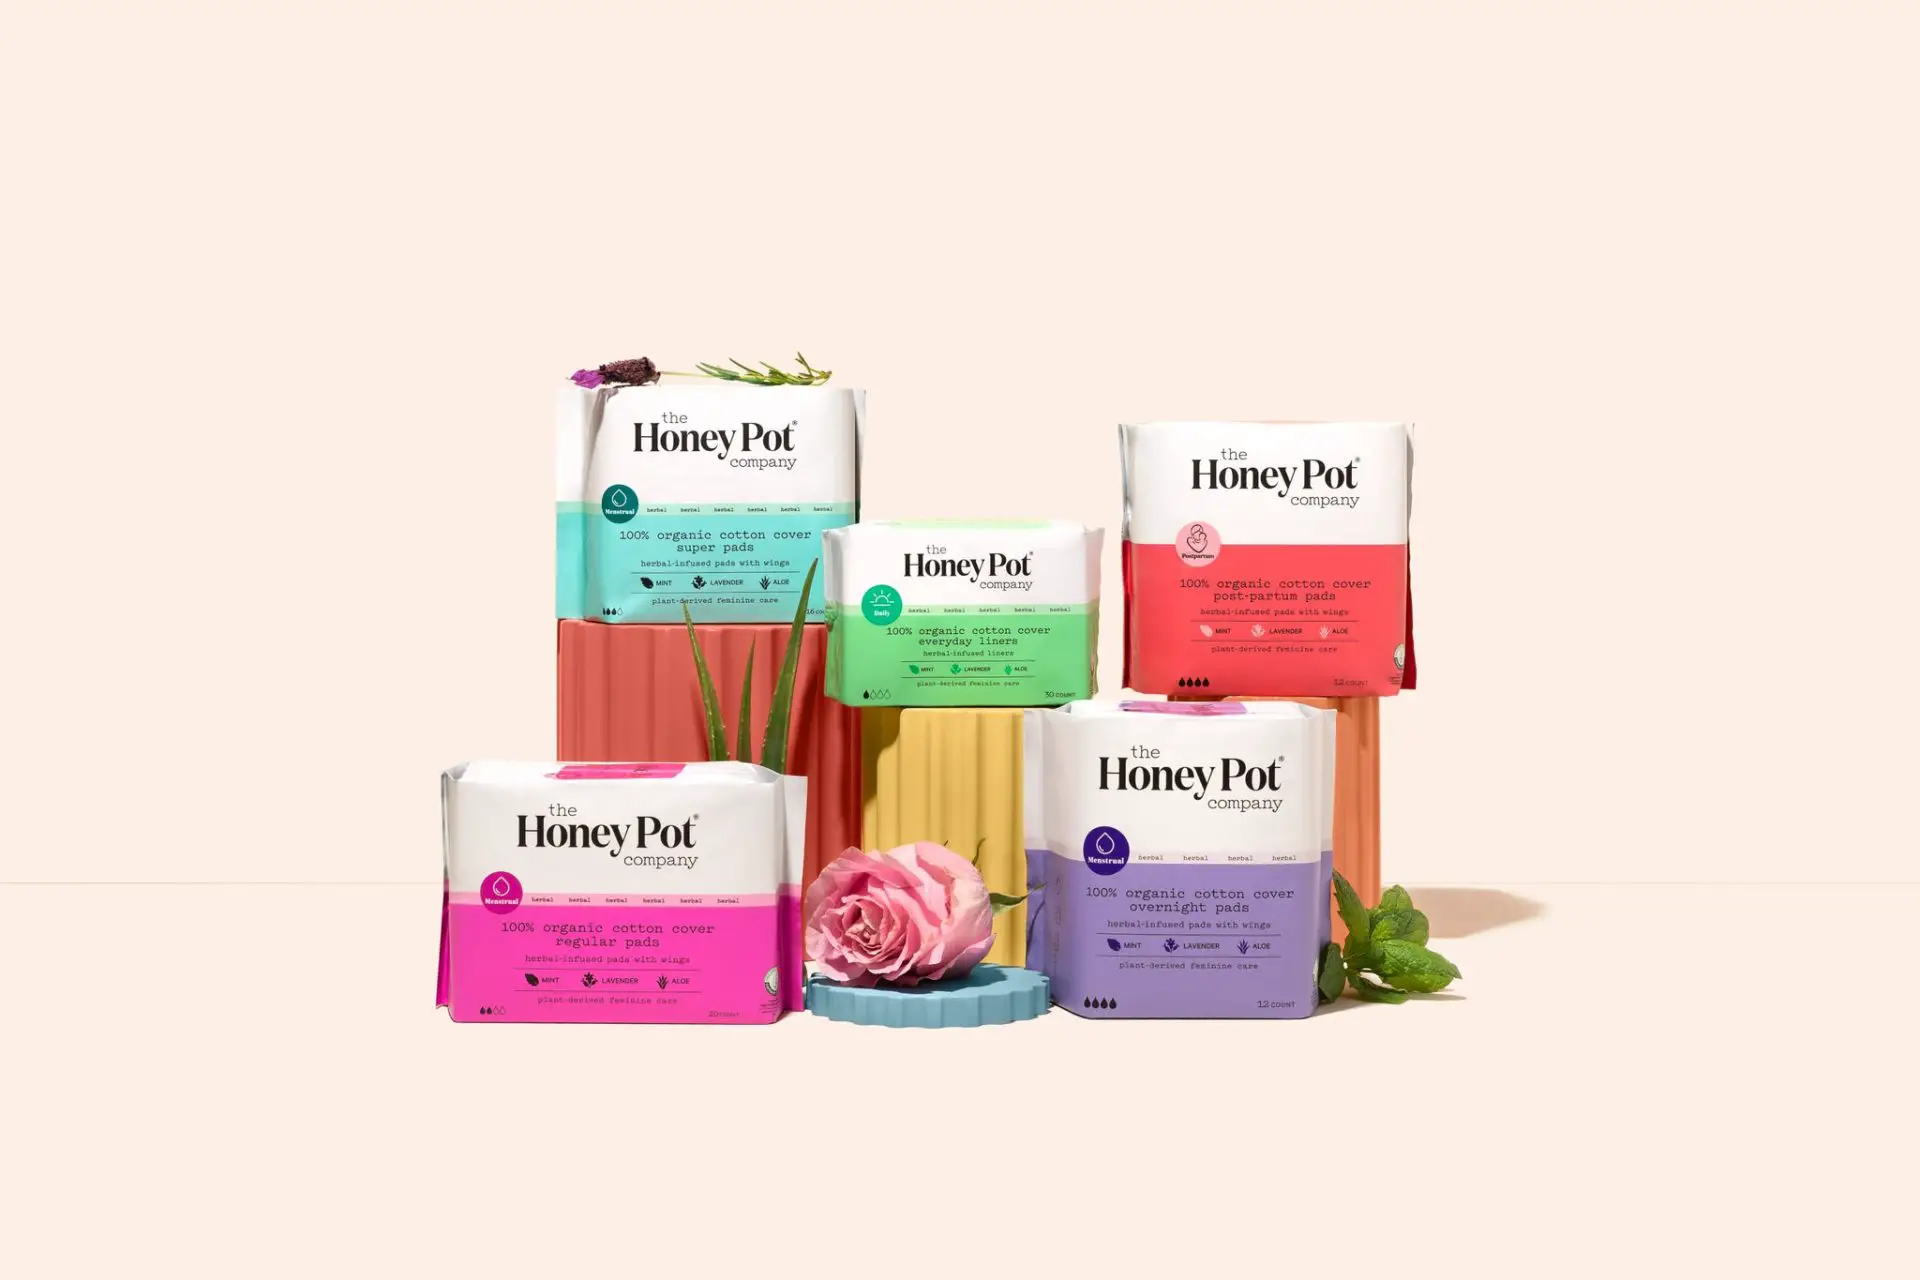 the honey pot product group shot